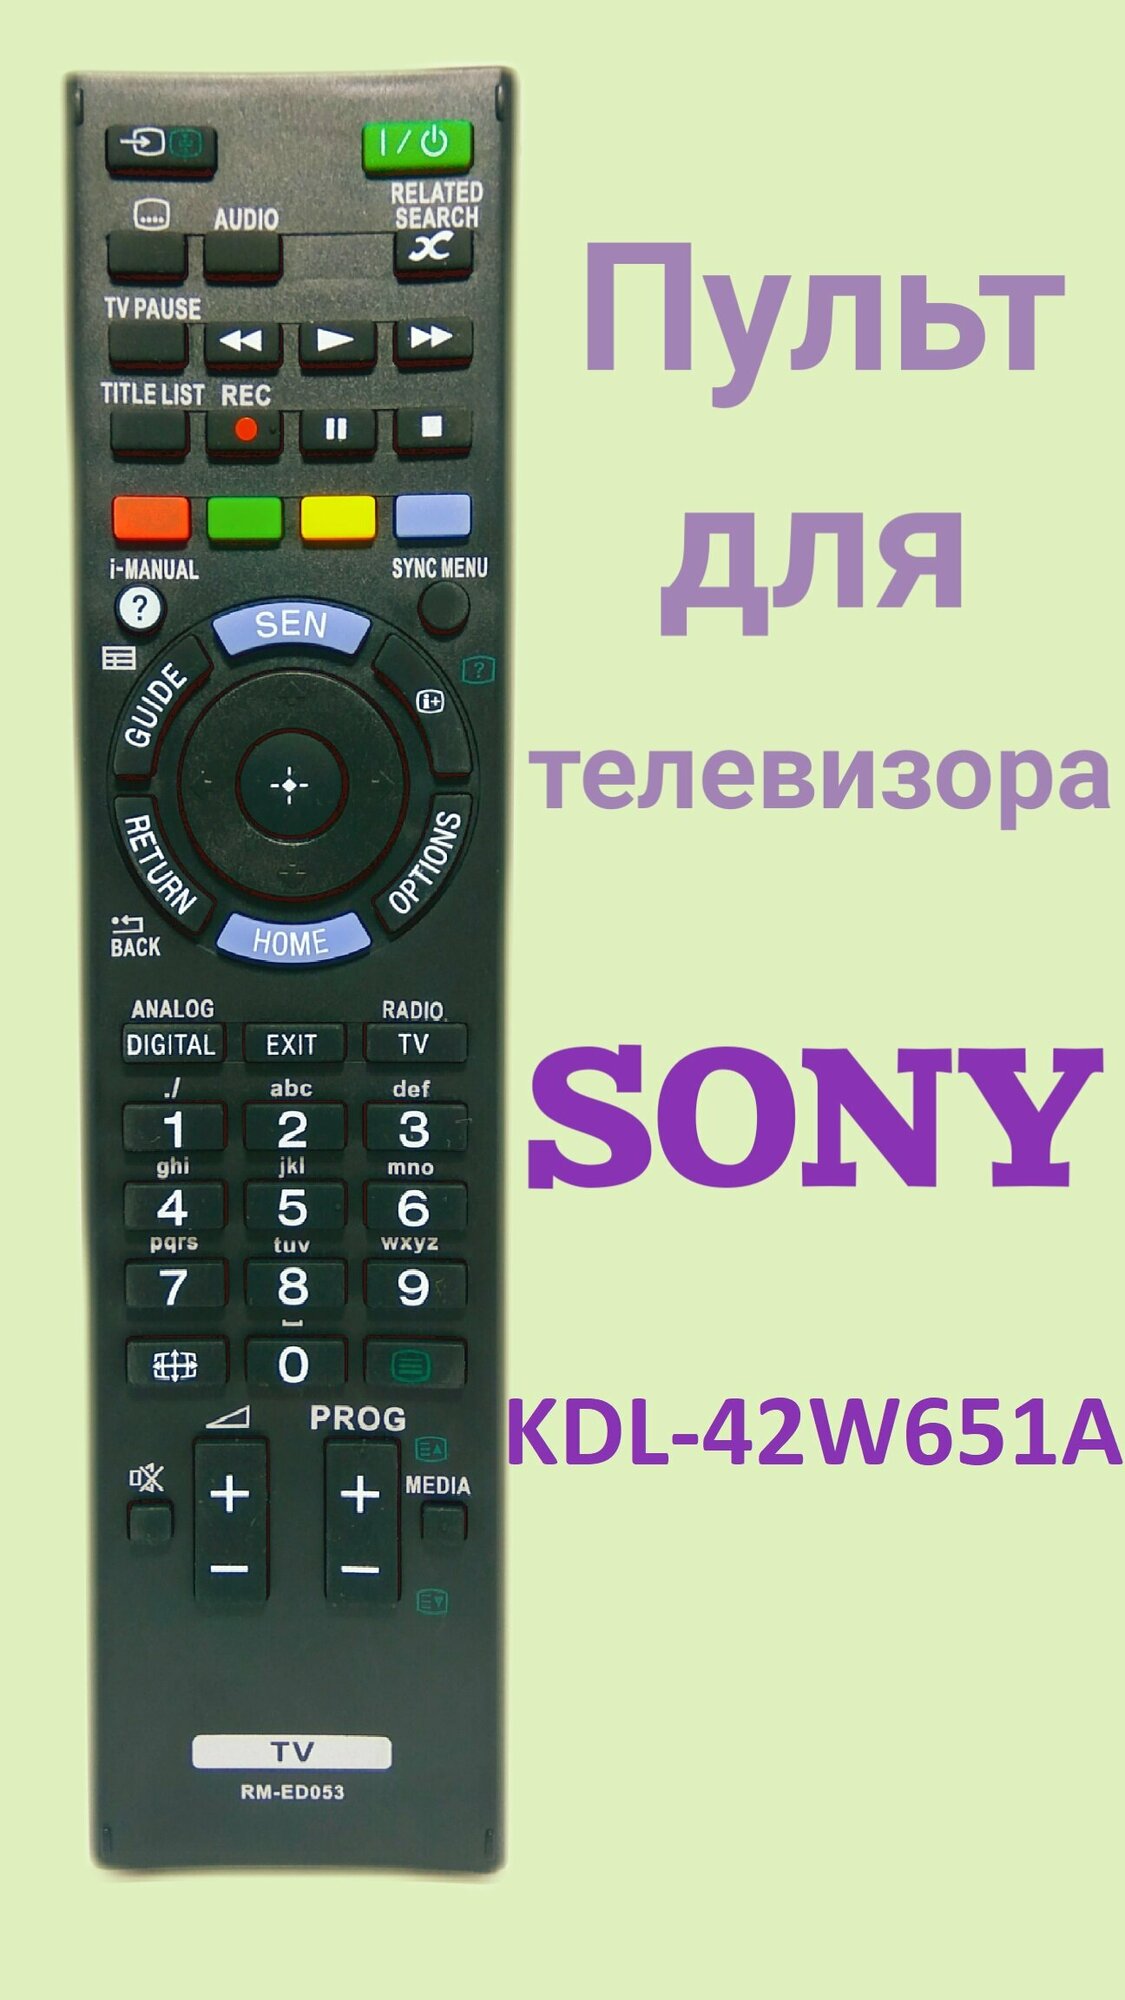 Пульт для телевизора SONY KDL-42W651A